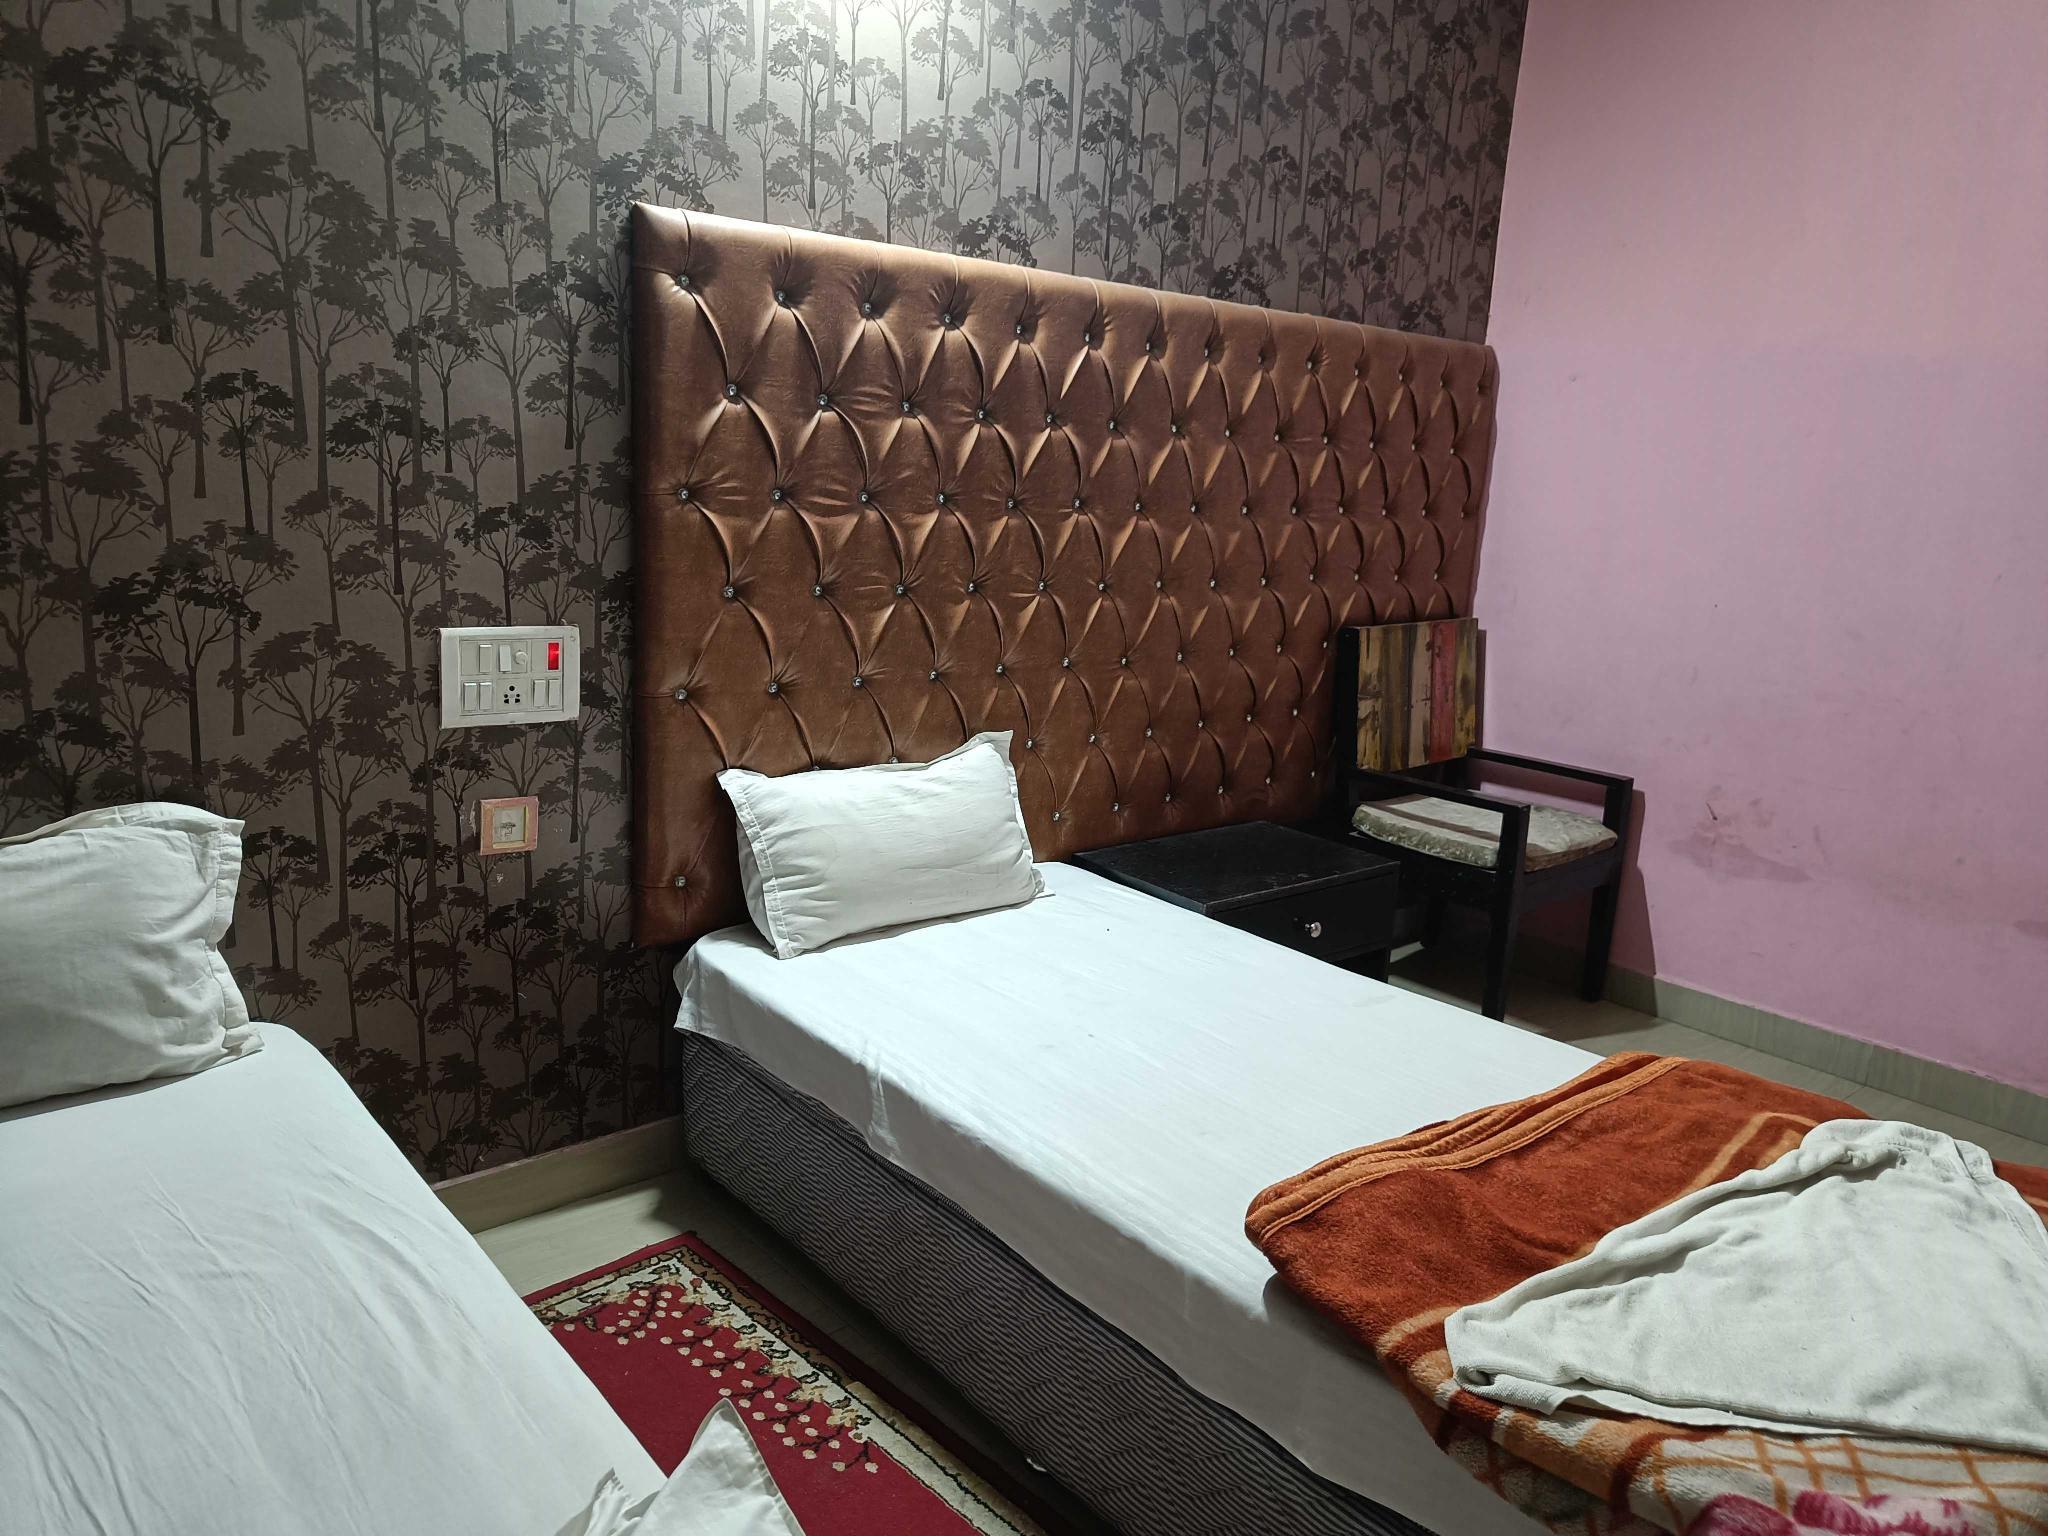 Oyo Hotel Buddha Saalt - Bodh Gaya